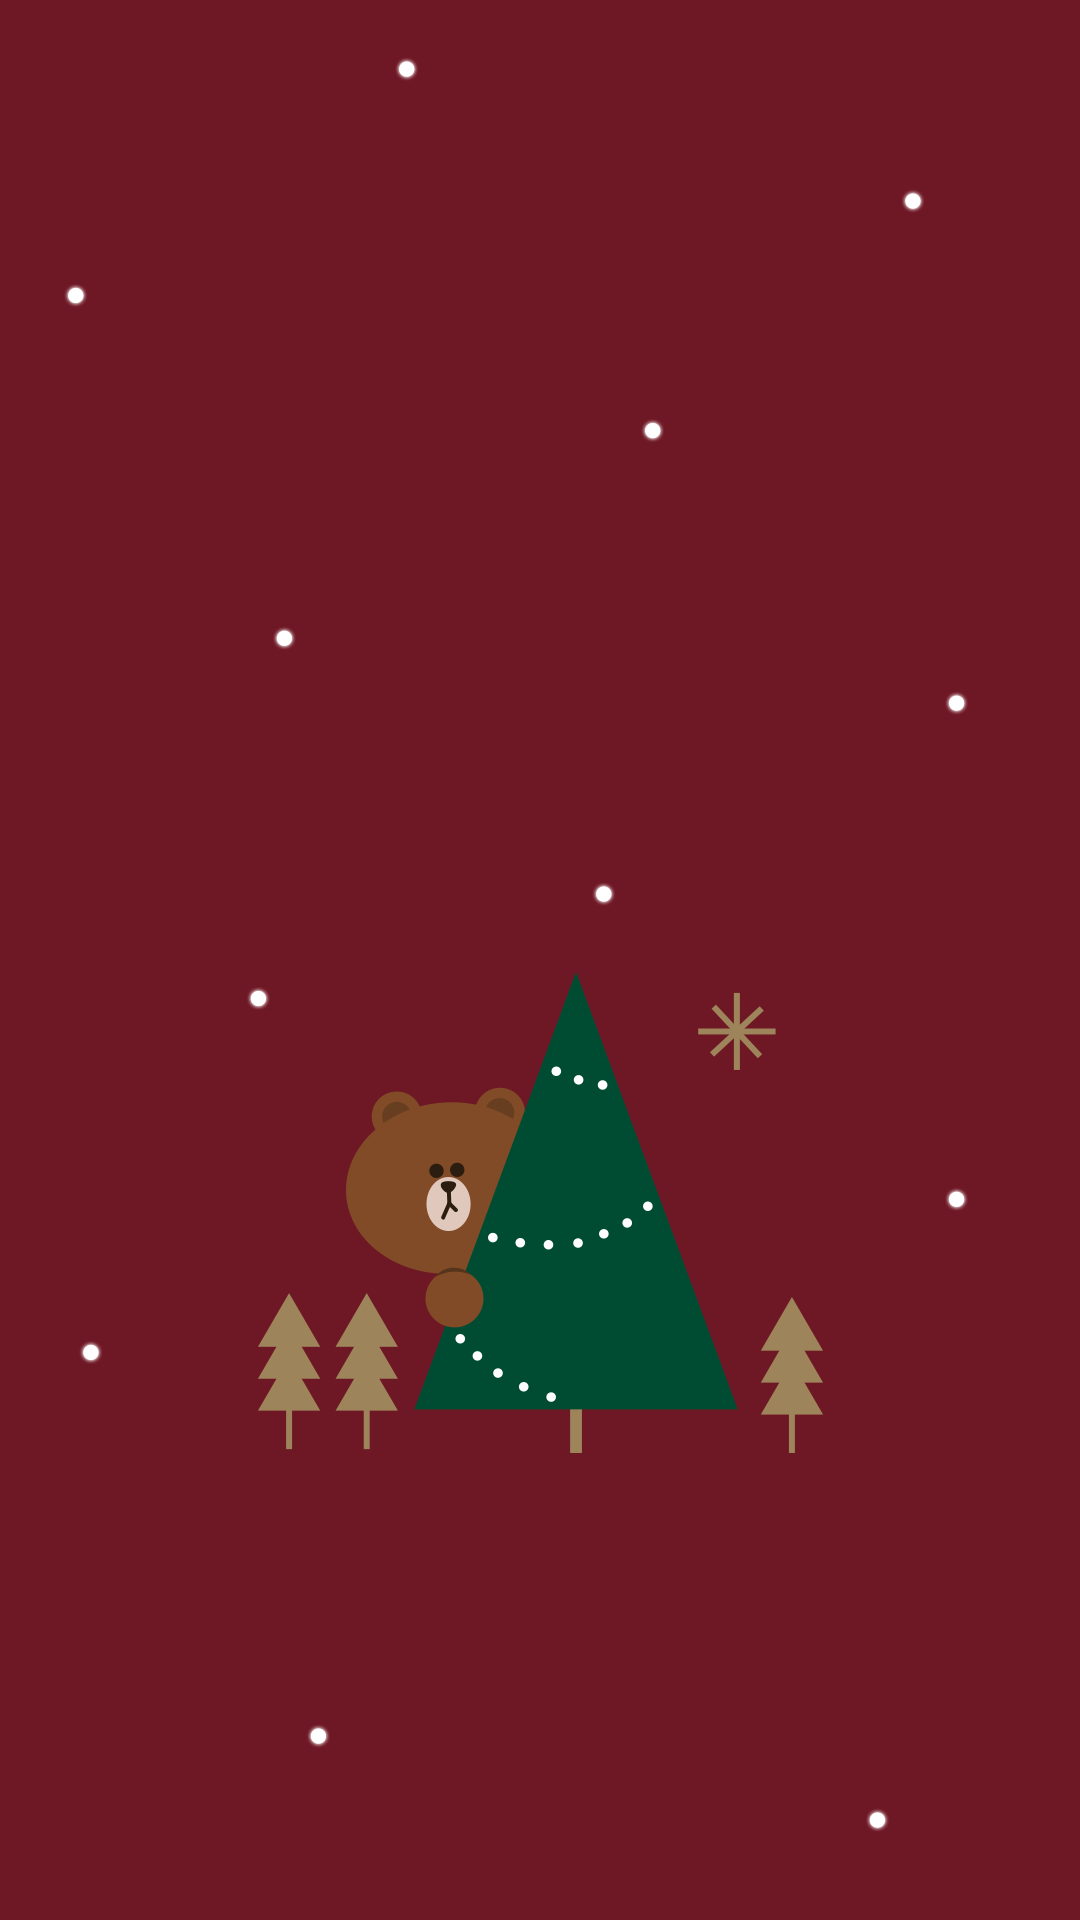 Line Deco公式アカウント 在 Twitter 上 Lineフレンズのクリスマス コレクション出ましたよ ブラウン コニー サリーのクリスマス 壁紙可愛いよね ブラウンの可愛い画像 Http T Co Vhykl5qulm Twitter